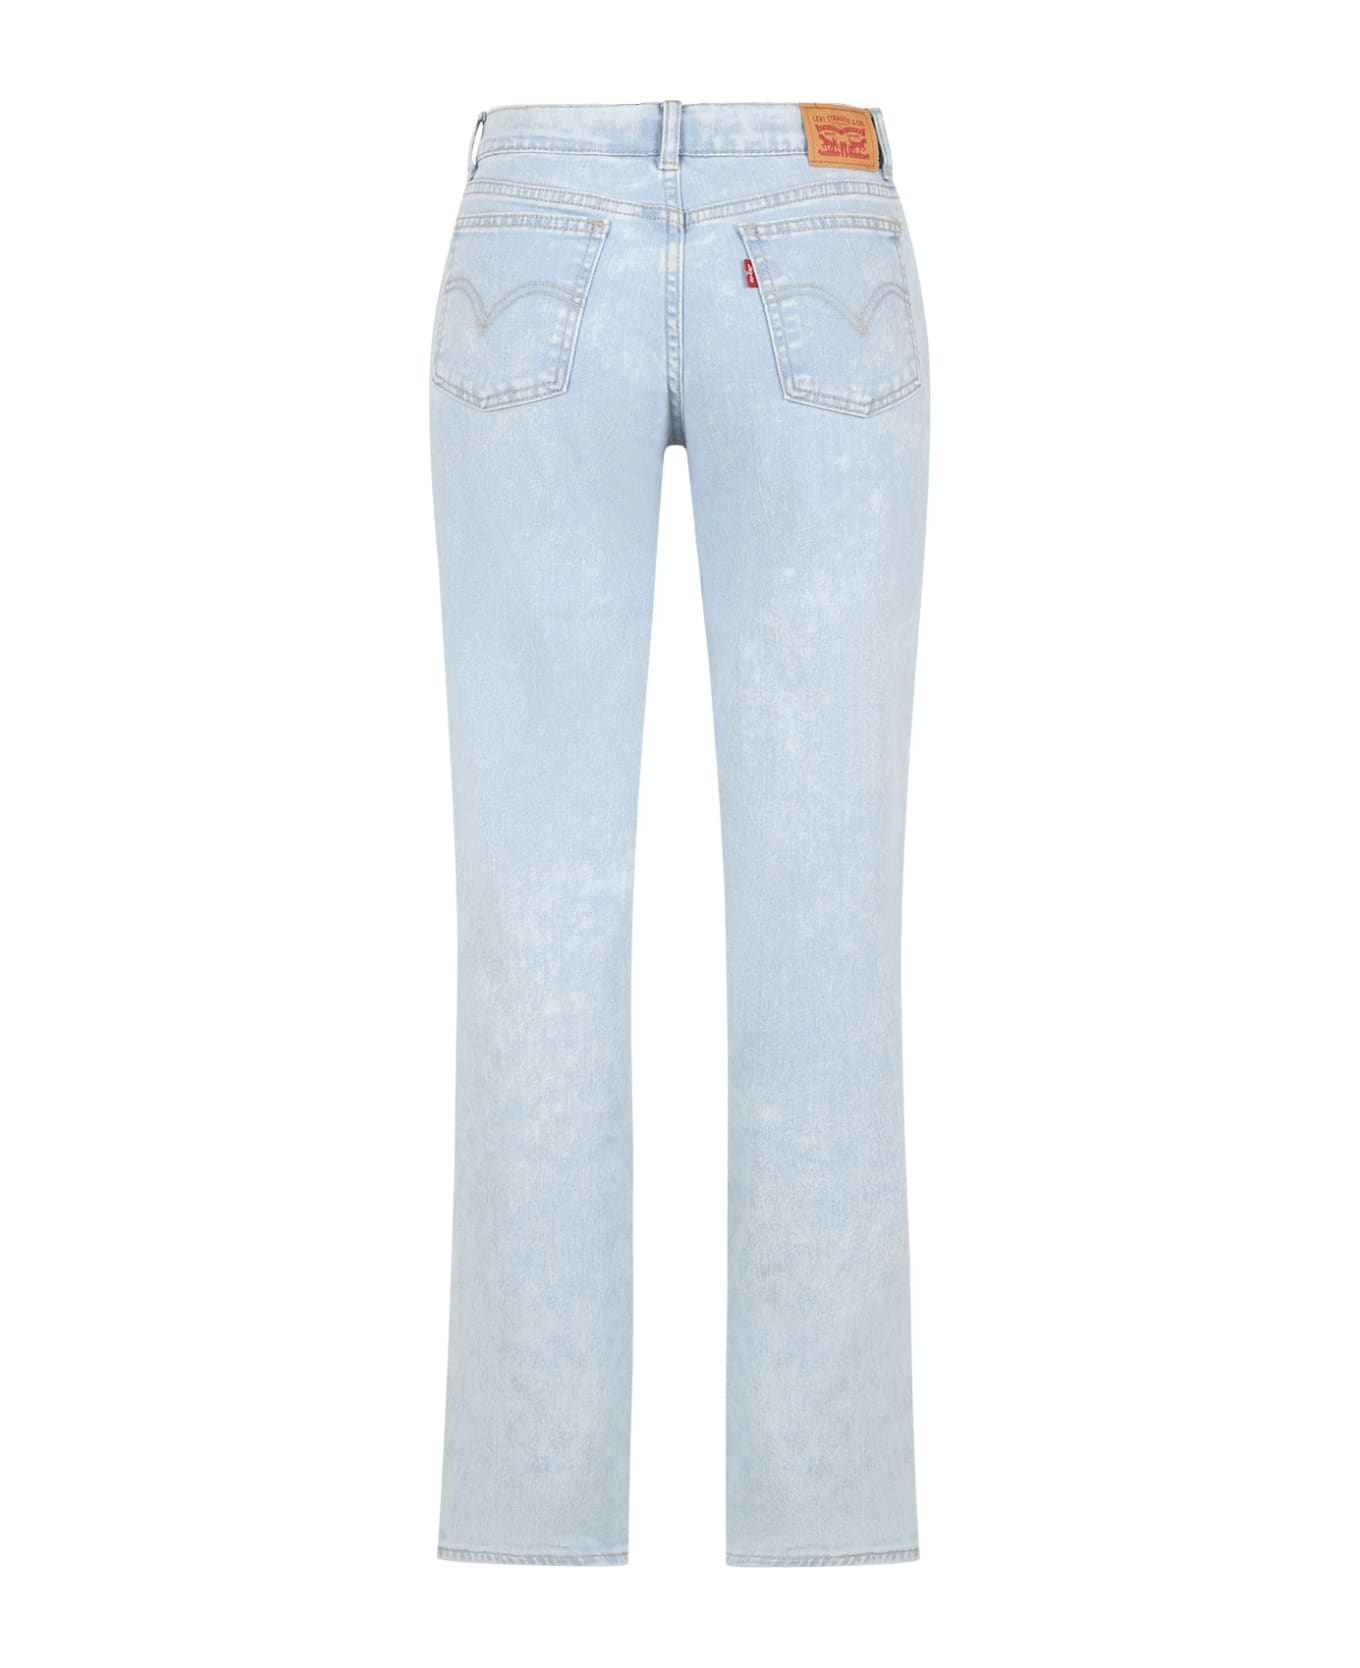 Levi's 726 Denim Jeans For Girl - Denim